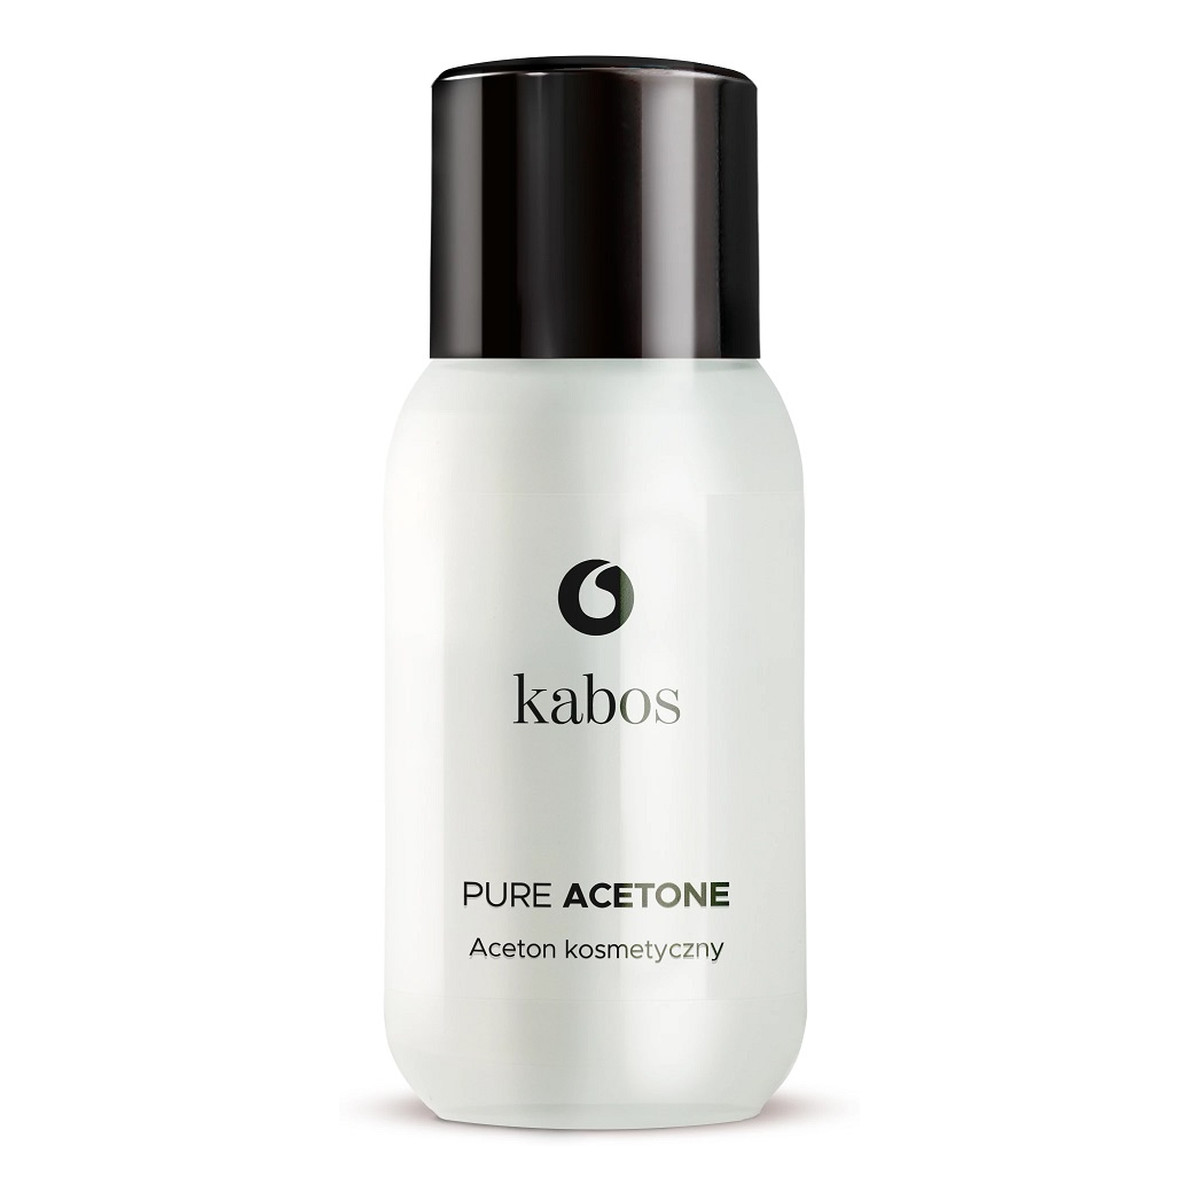 Kabos Pure acetone aceton kosmetyczny 150ml